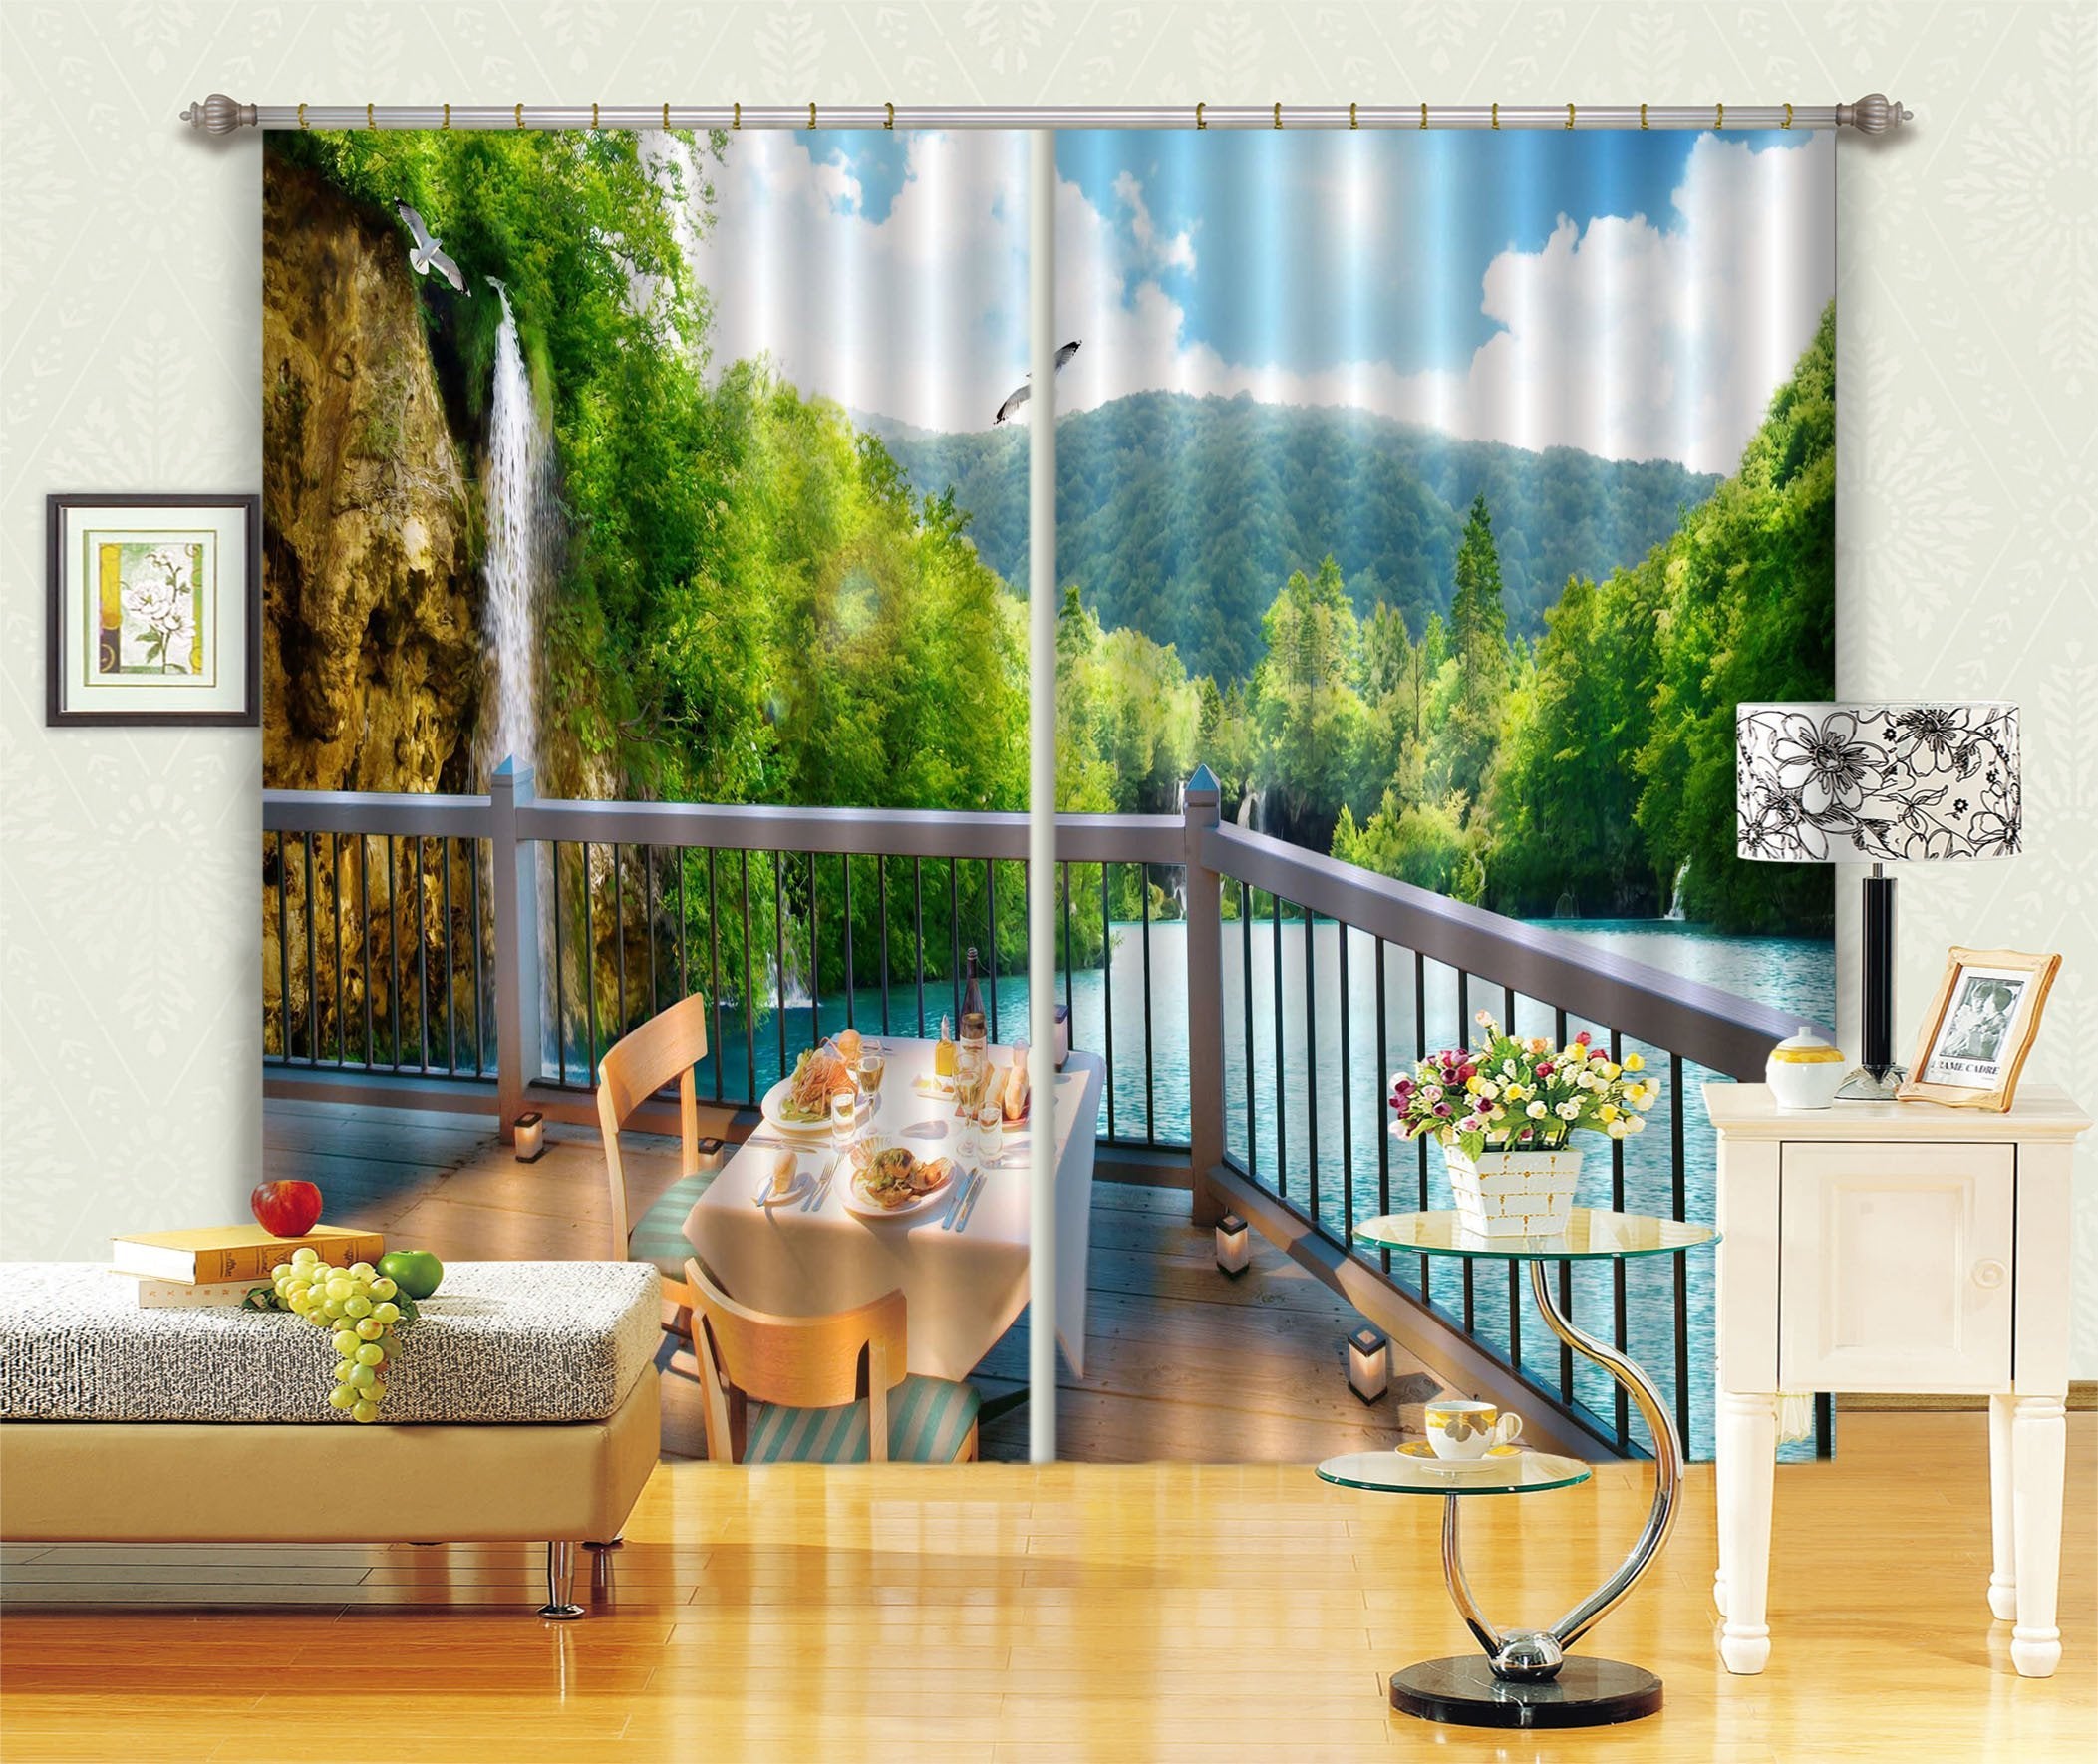 3D Balcony Lake Scenery Curtains Drapes Wallpaper AJ Wallpaper 